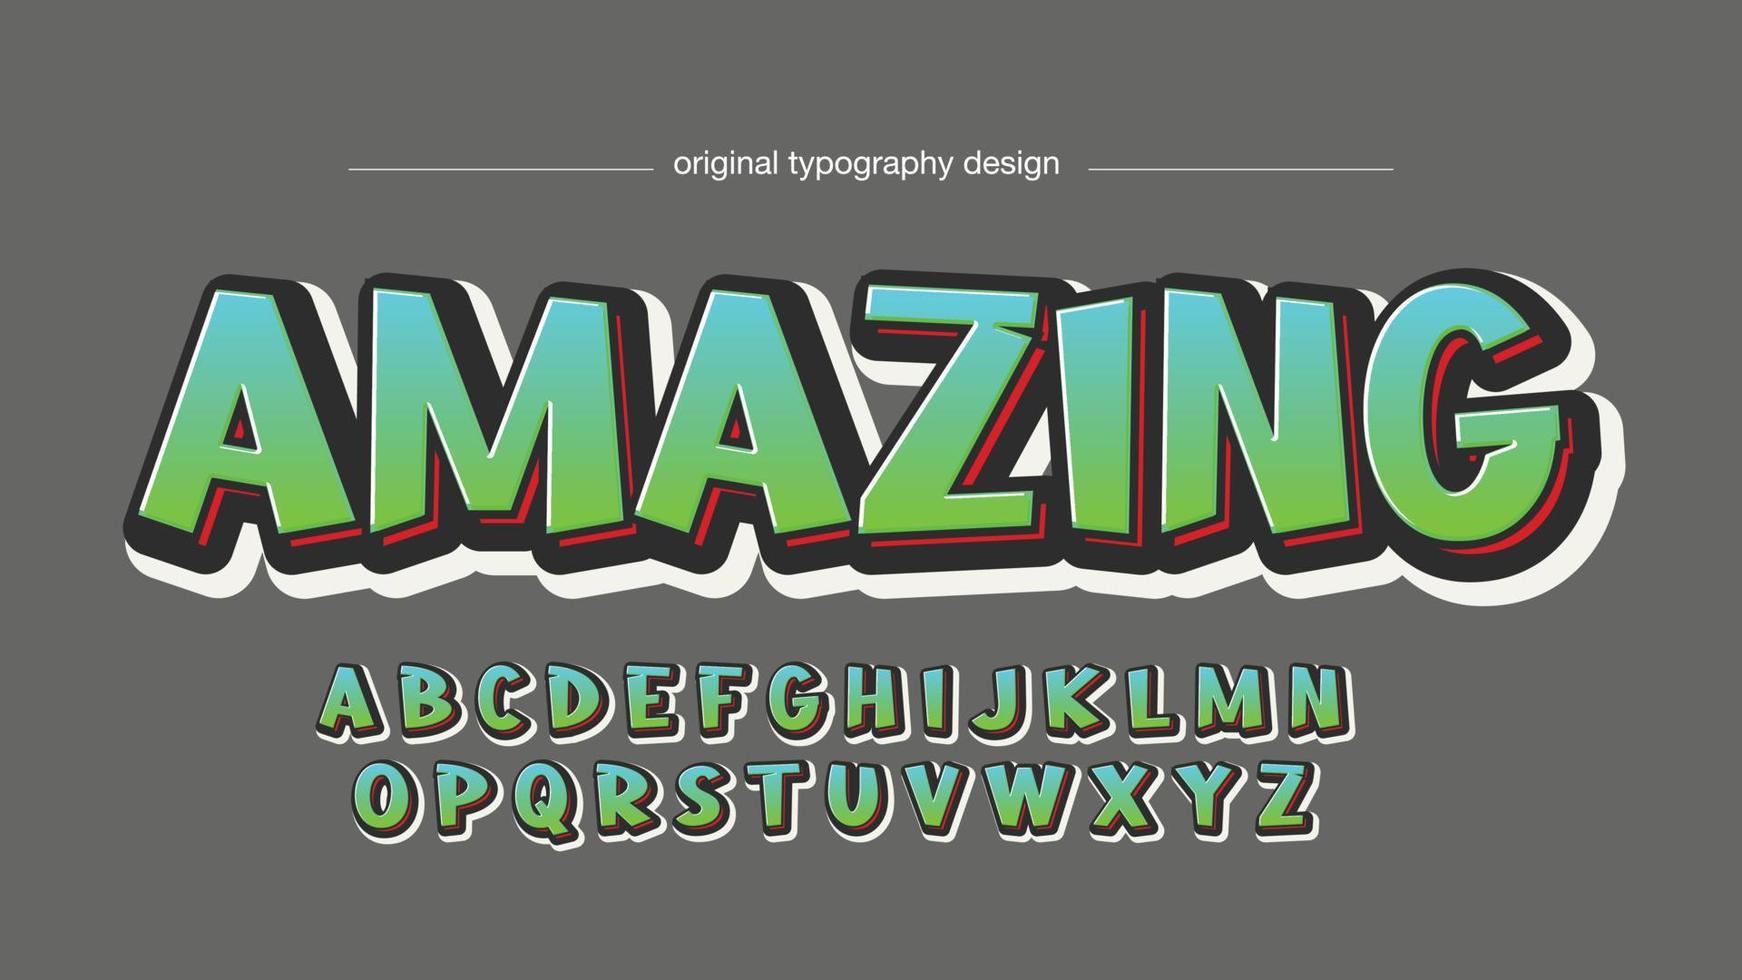 grün-blaue 3d-cartoon-display-typografie vektor